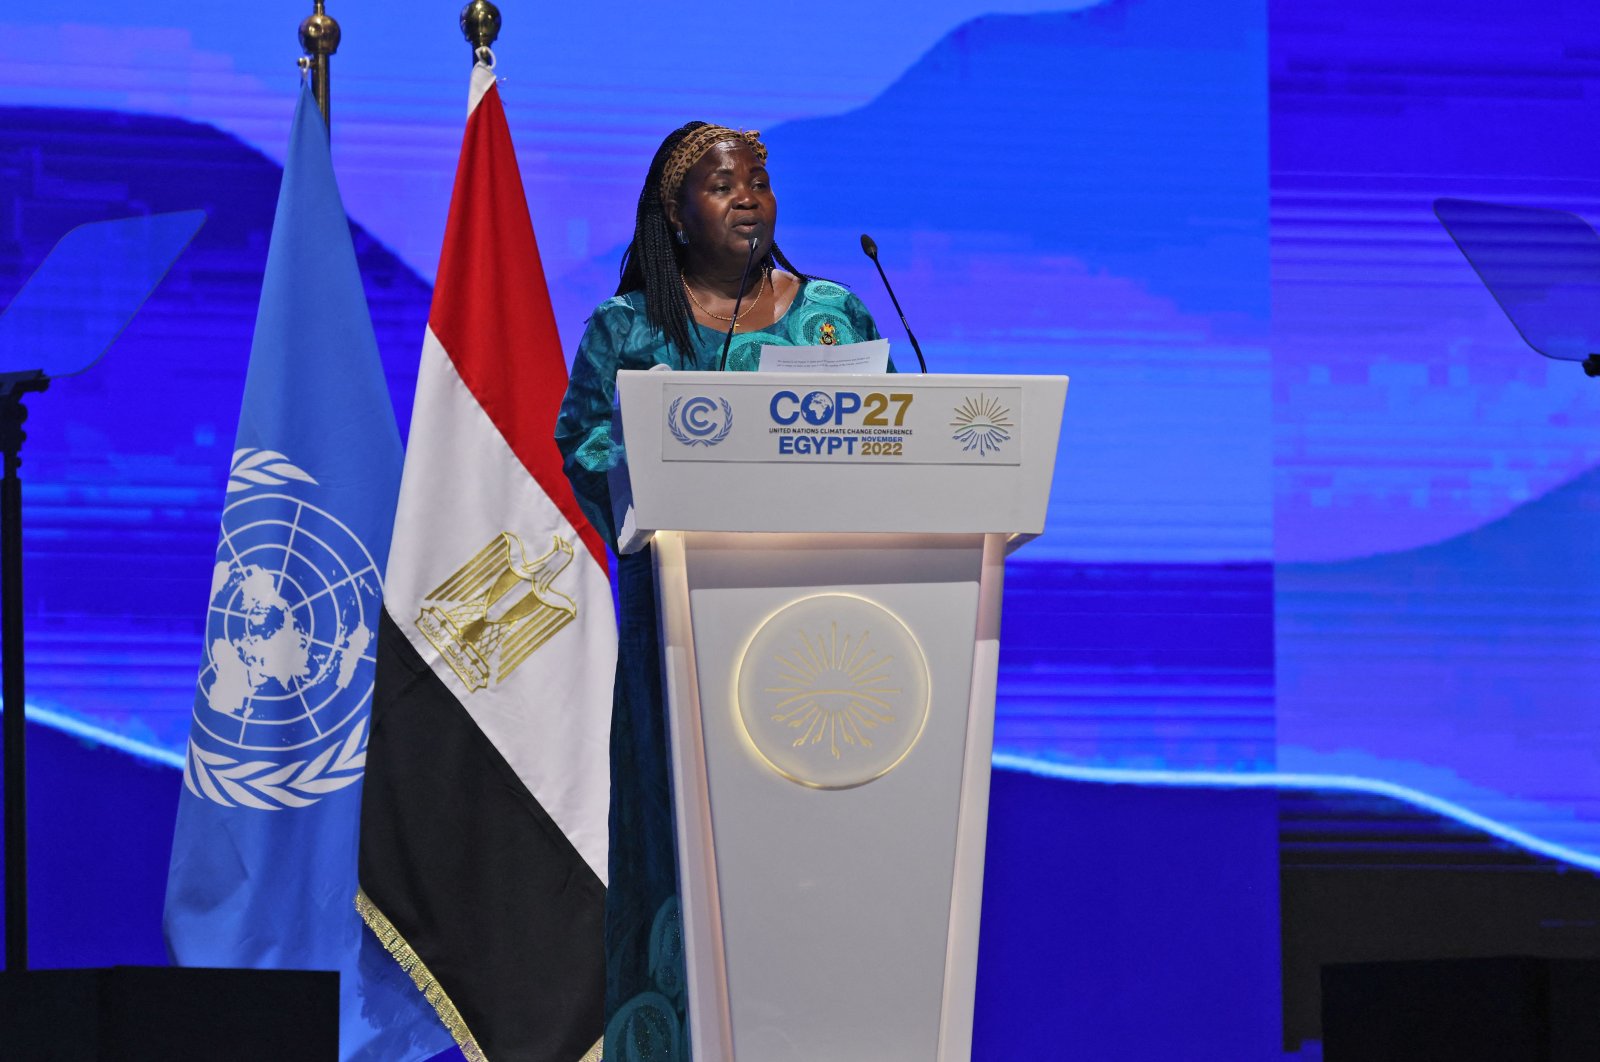 Ugandan Minister of Energy and Mineral Development Ruth Nankabirwa Ssentamu speaks at the COP27 climate conference in Sharm el-Sheikh, Egypt, Nov. 15, 2022. (AFP Photo)